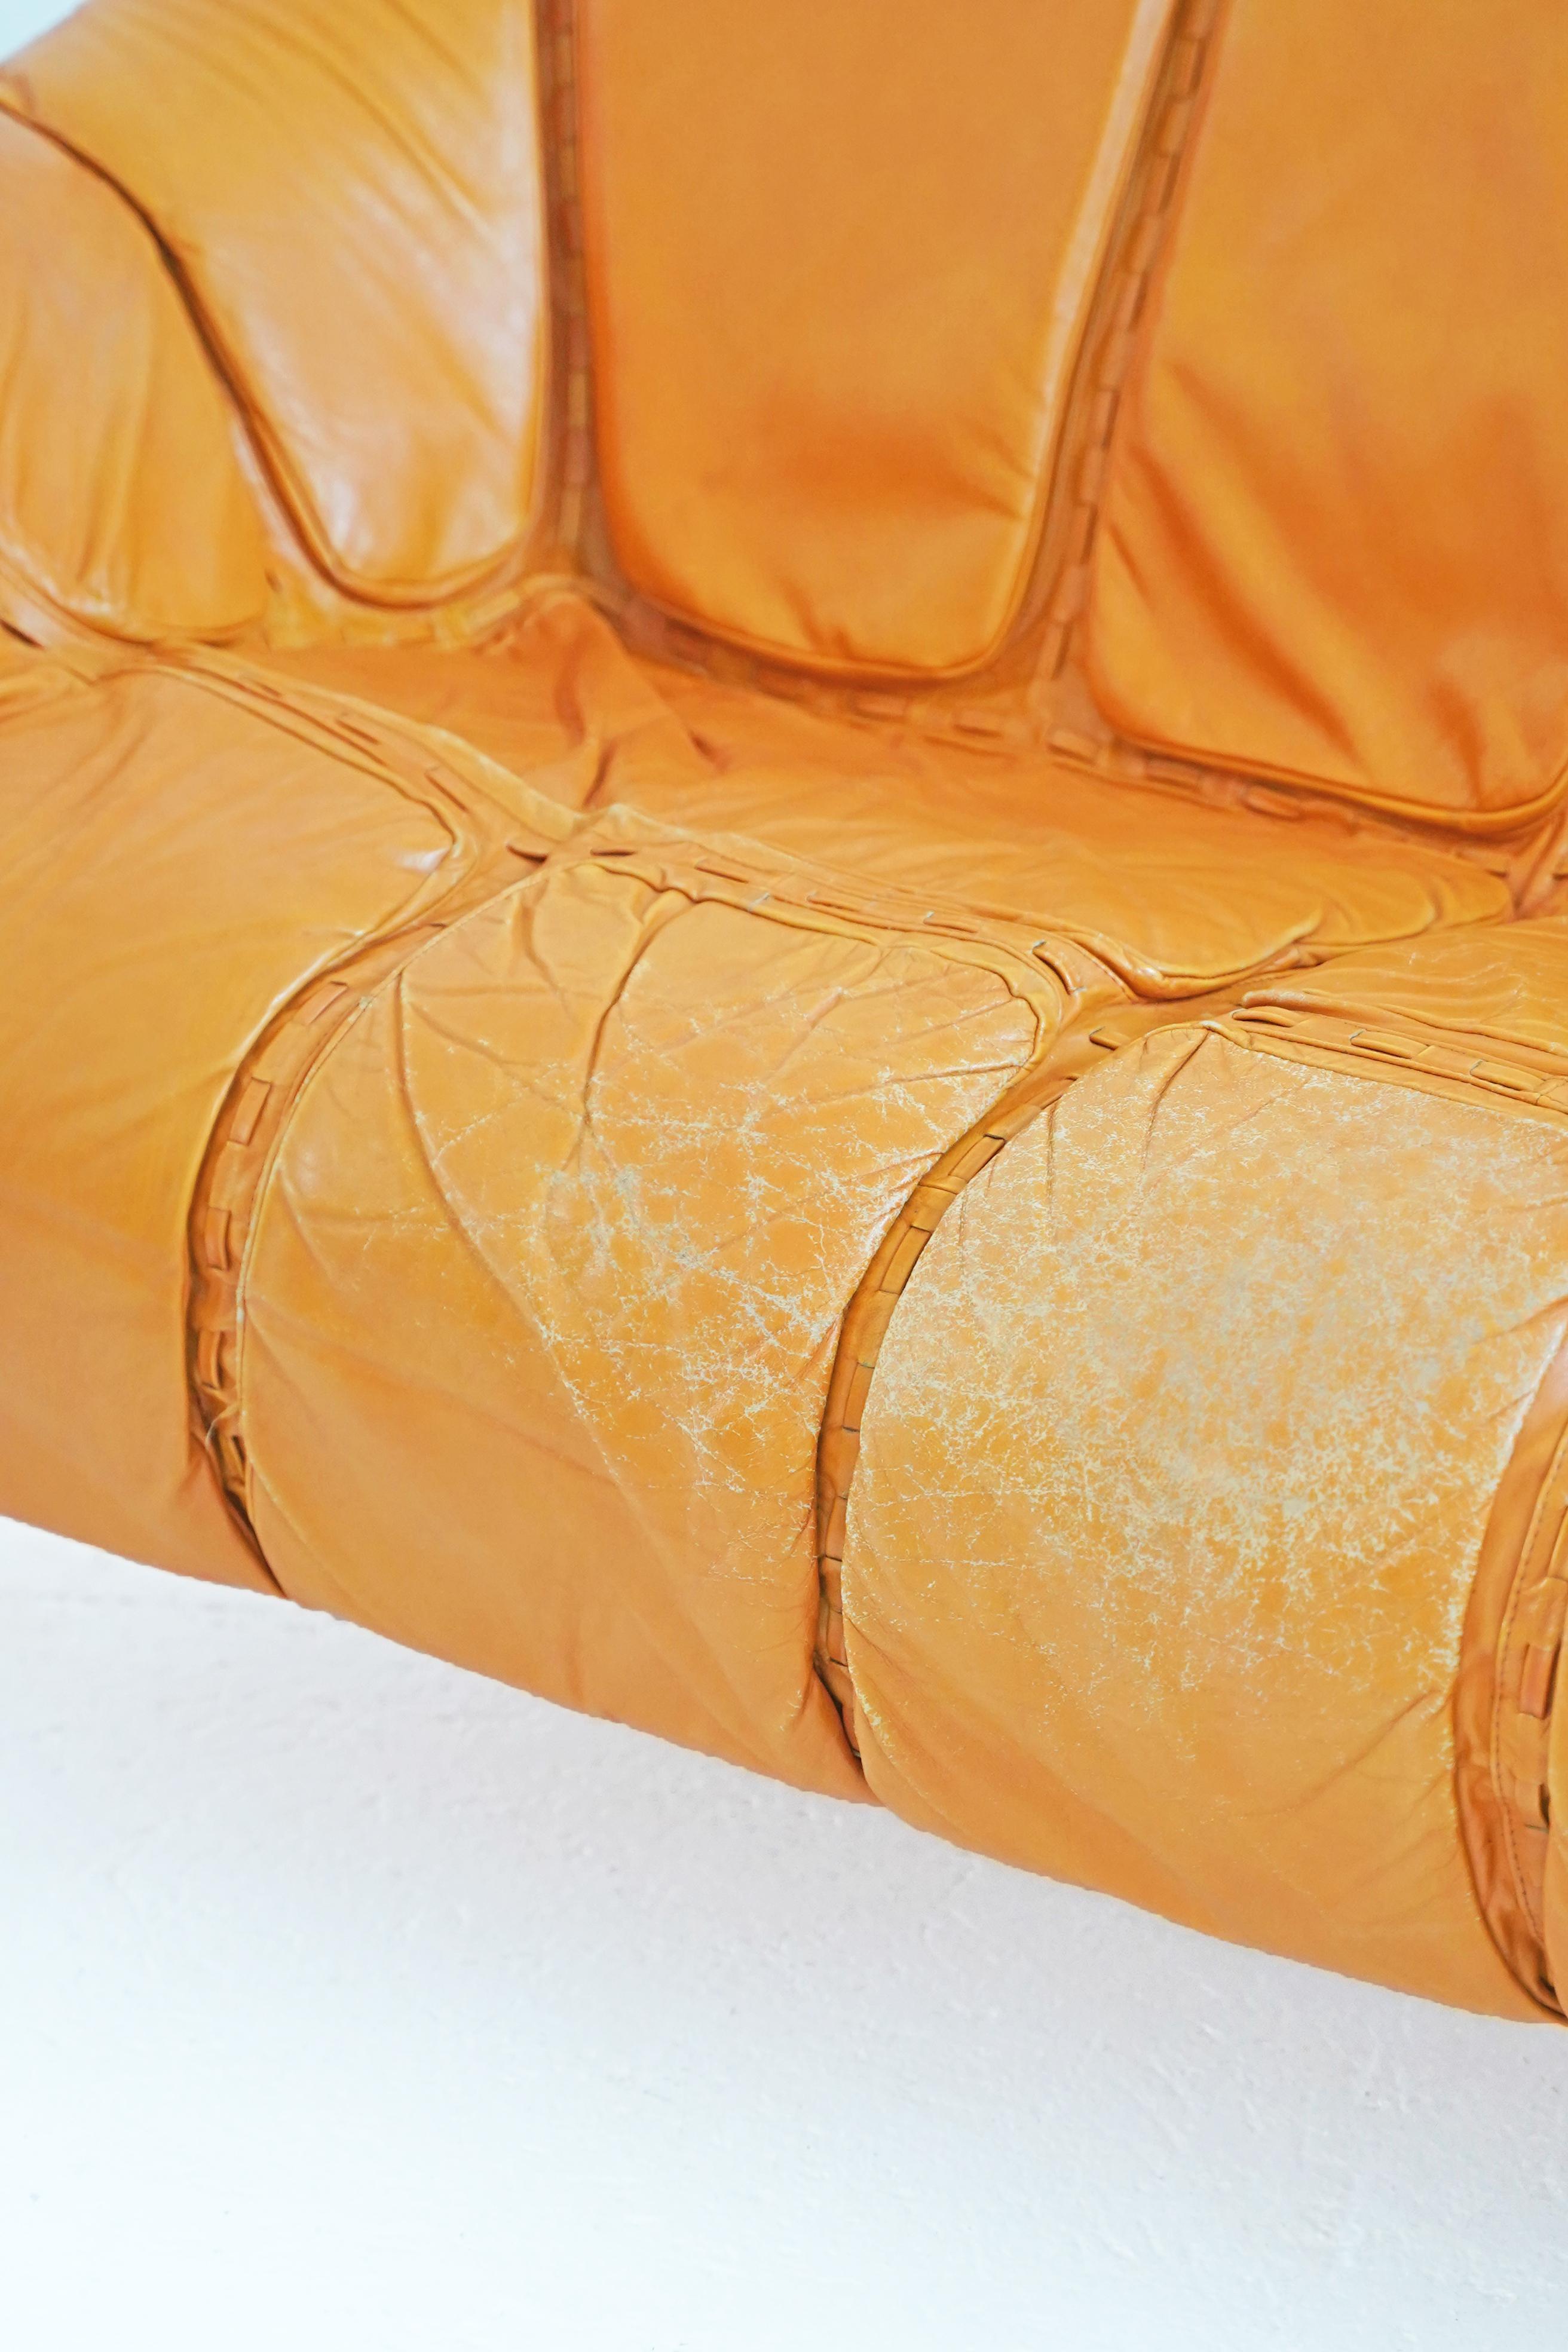 MP-211 Sofa in Leather by Brazilian Designer Percival Lafer for Móveis Lafer 12